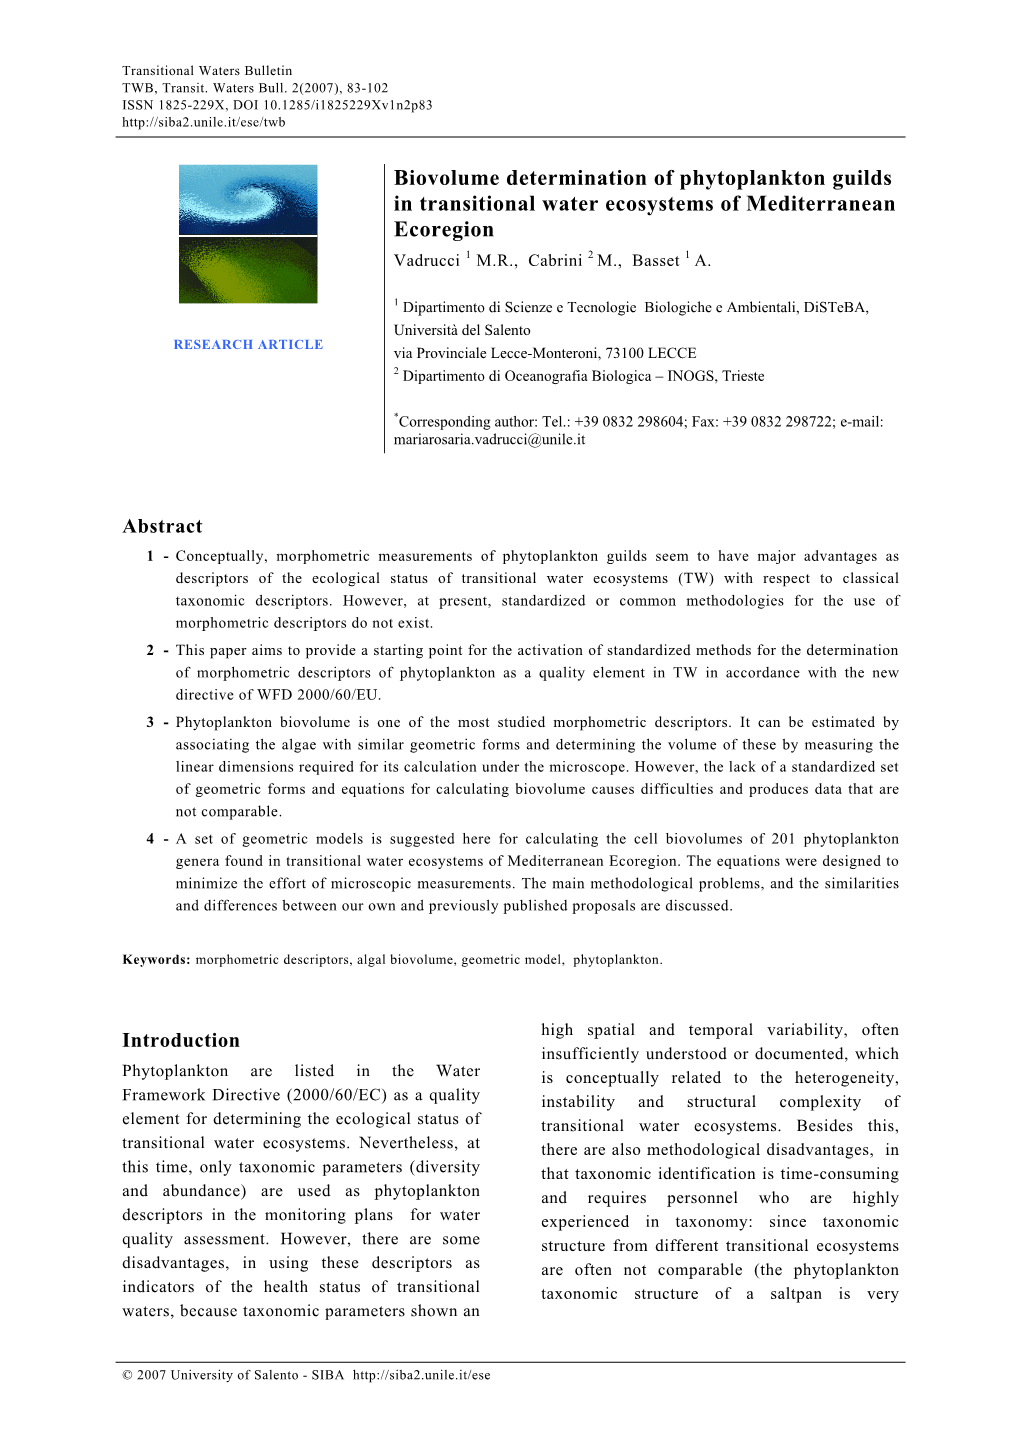 Biovolume Determination of Phytoplankton Guilds in Transitional Water Ecosystems of Mediterranean Ecoregion Vadrucci 1 M.R., Cabrini 2 M., Basset 1 A